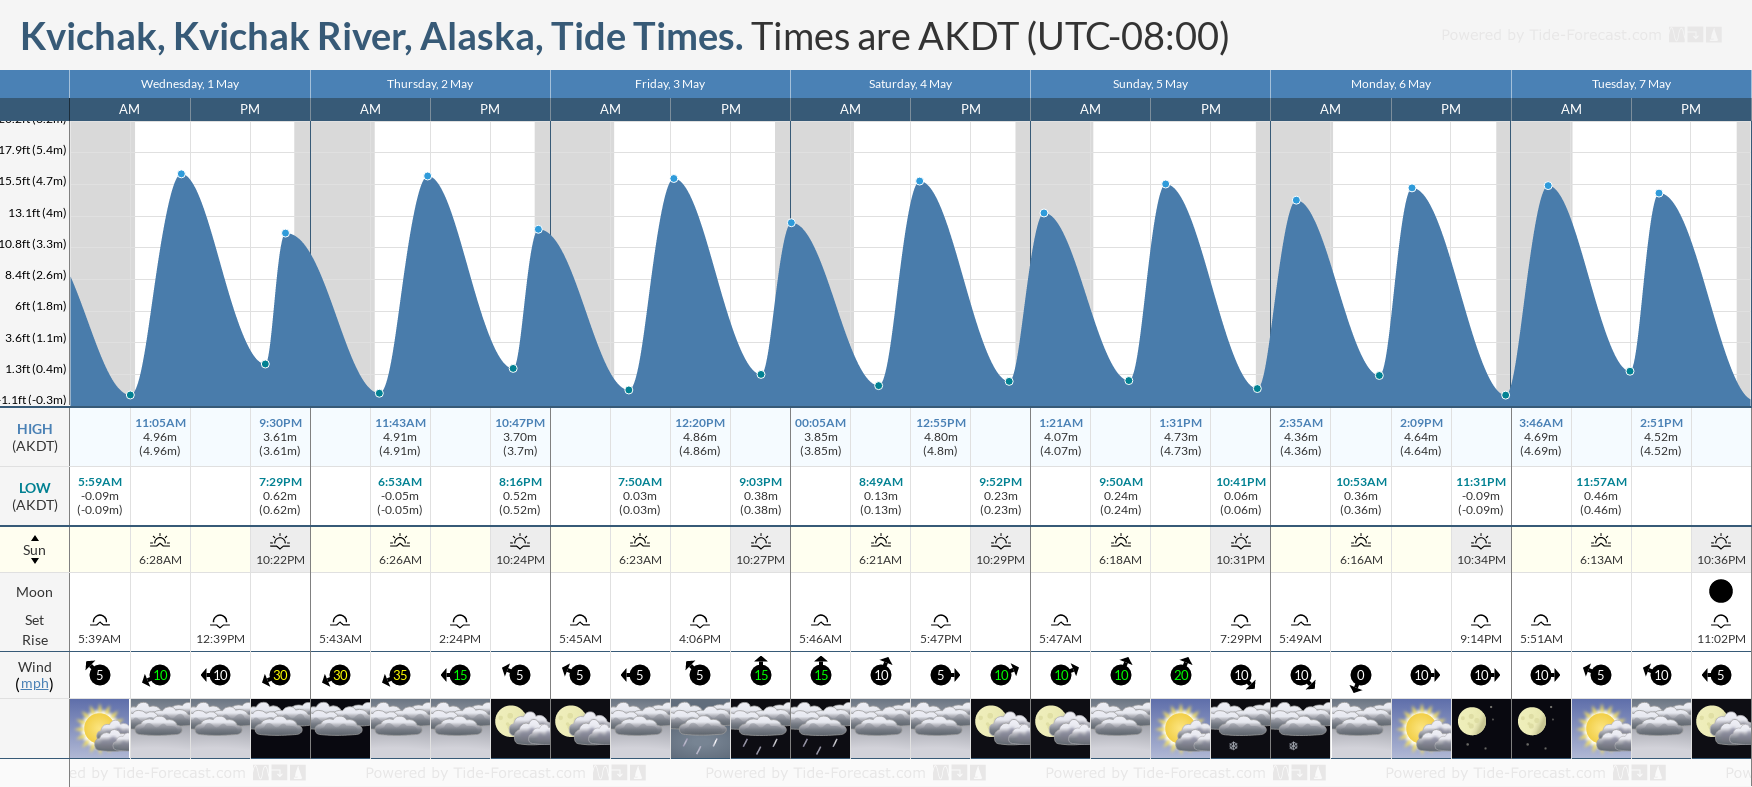 Kvichak, Kvichak River, Alaska Tide Chart including high and low tide tide times for the next 7 days